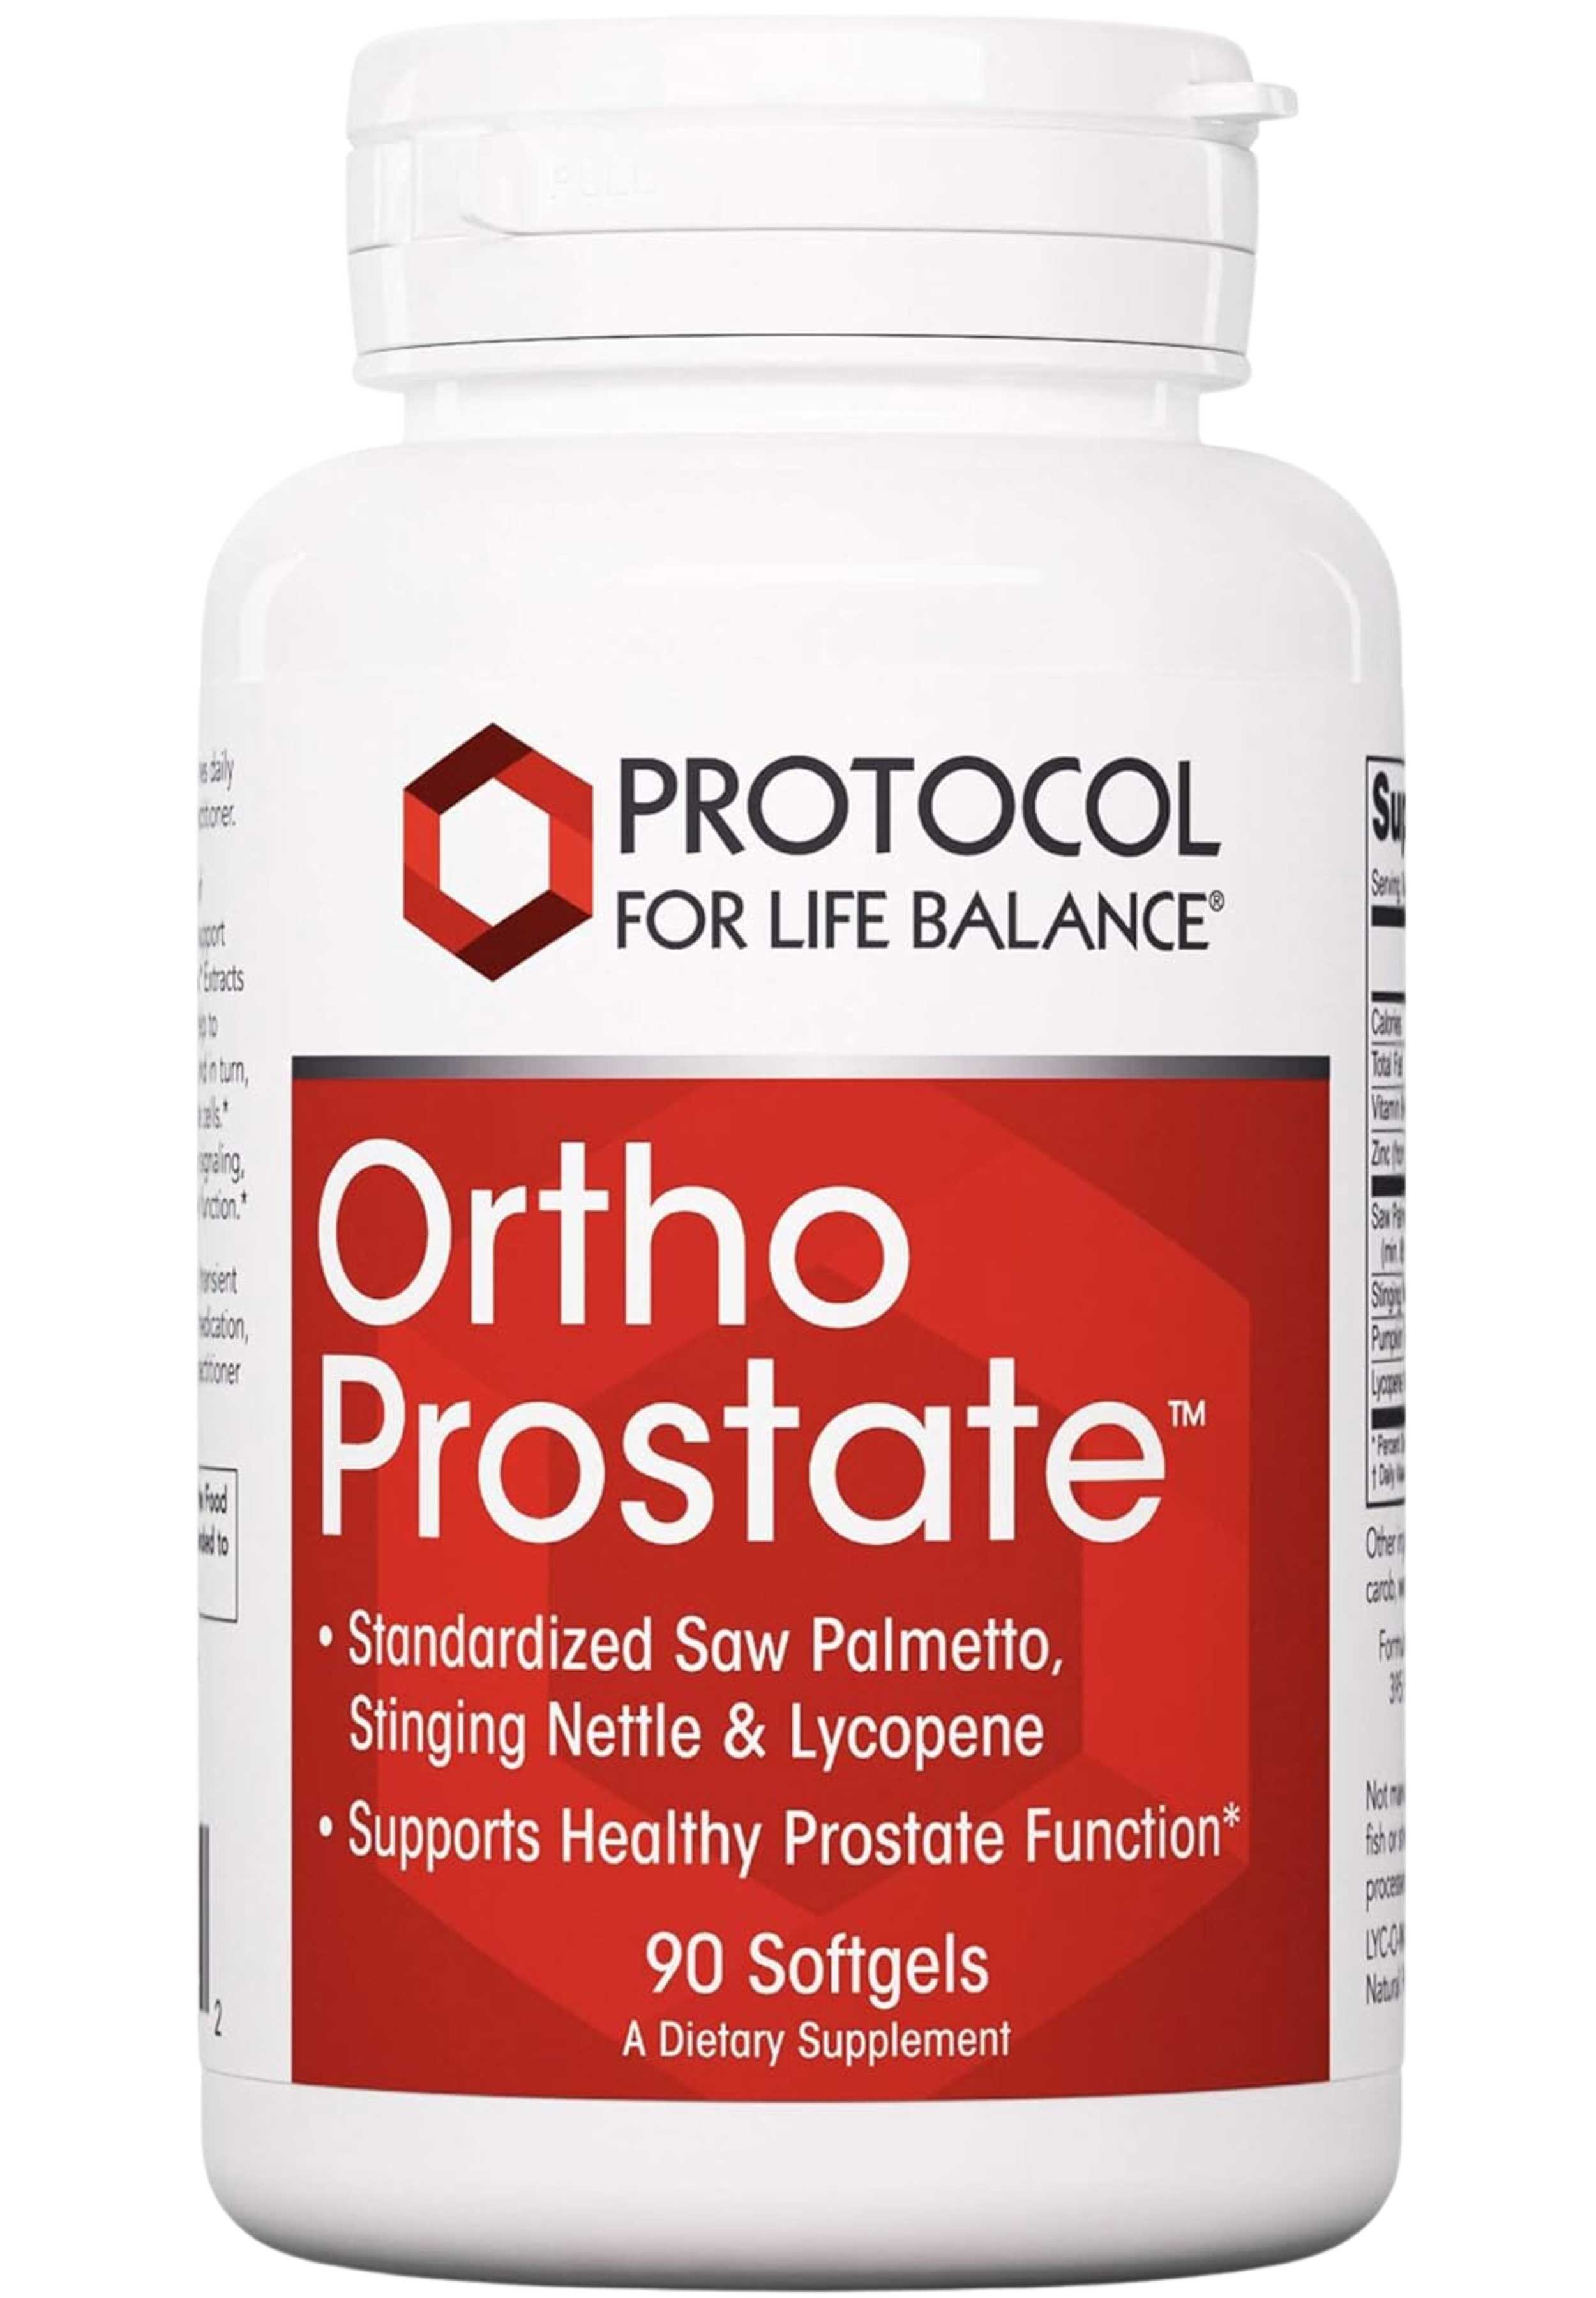 Protocol for Life Balance Ortho Prostate